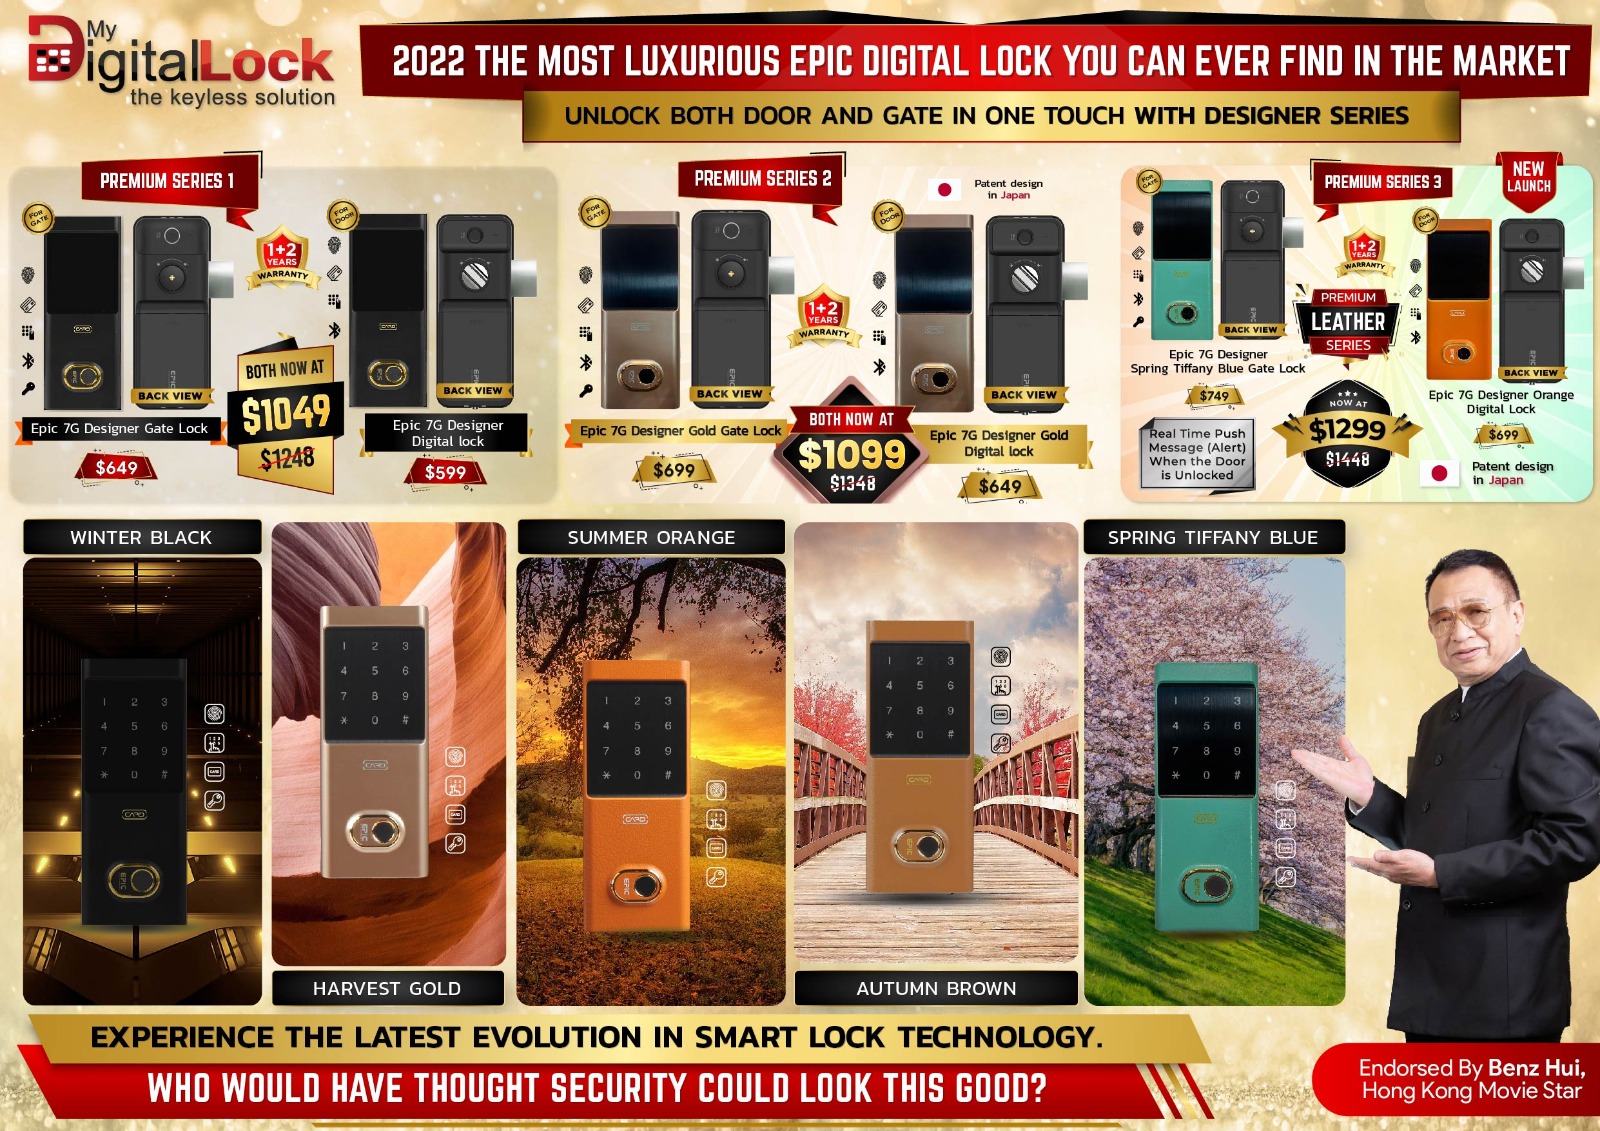 My Digital Lock EPIC Designer Series Digital Lock